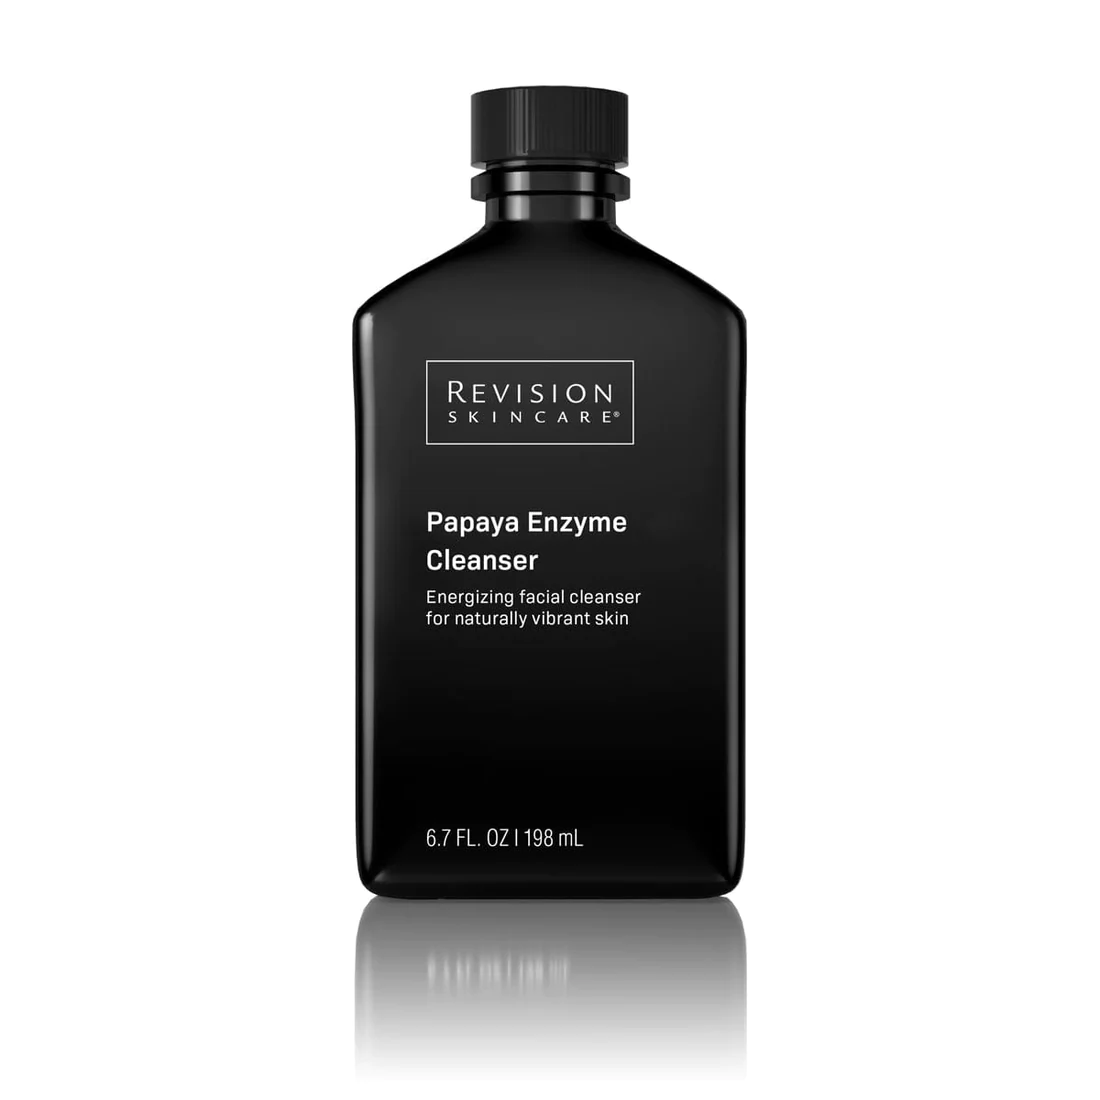 Revision Skincare Papaya Enzyme Cleaner bottle